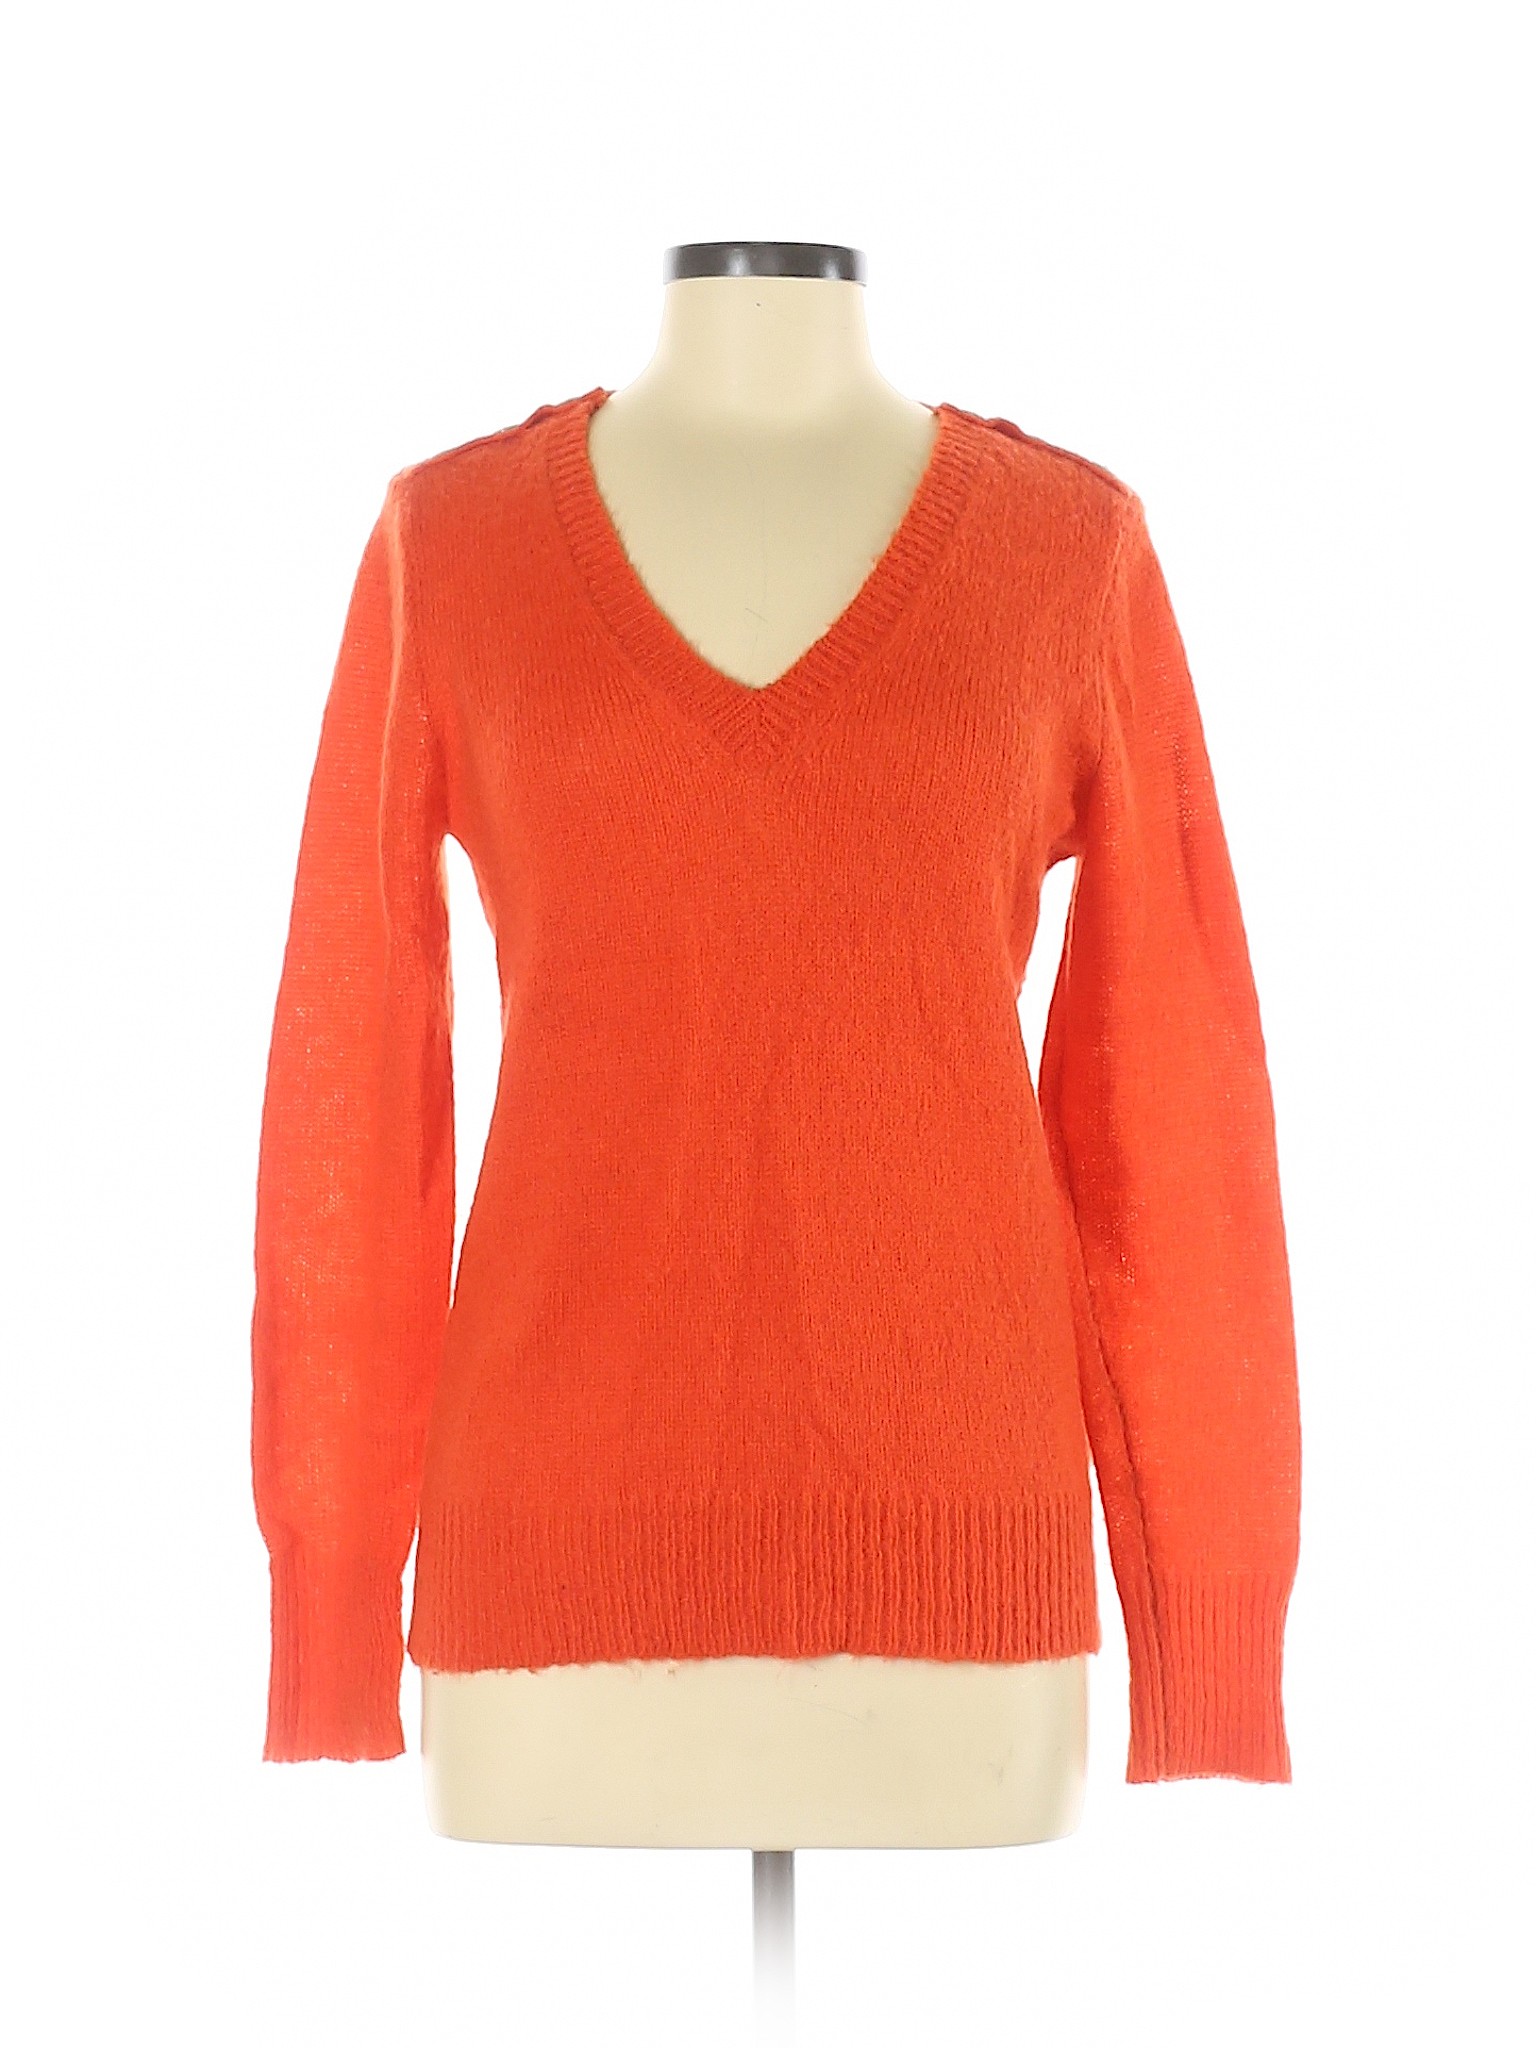 J.Crew Women Orange Pullover Sweater M | eBay